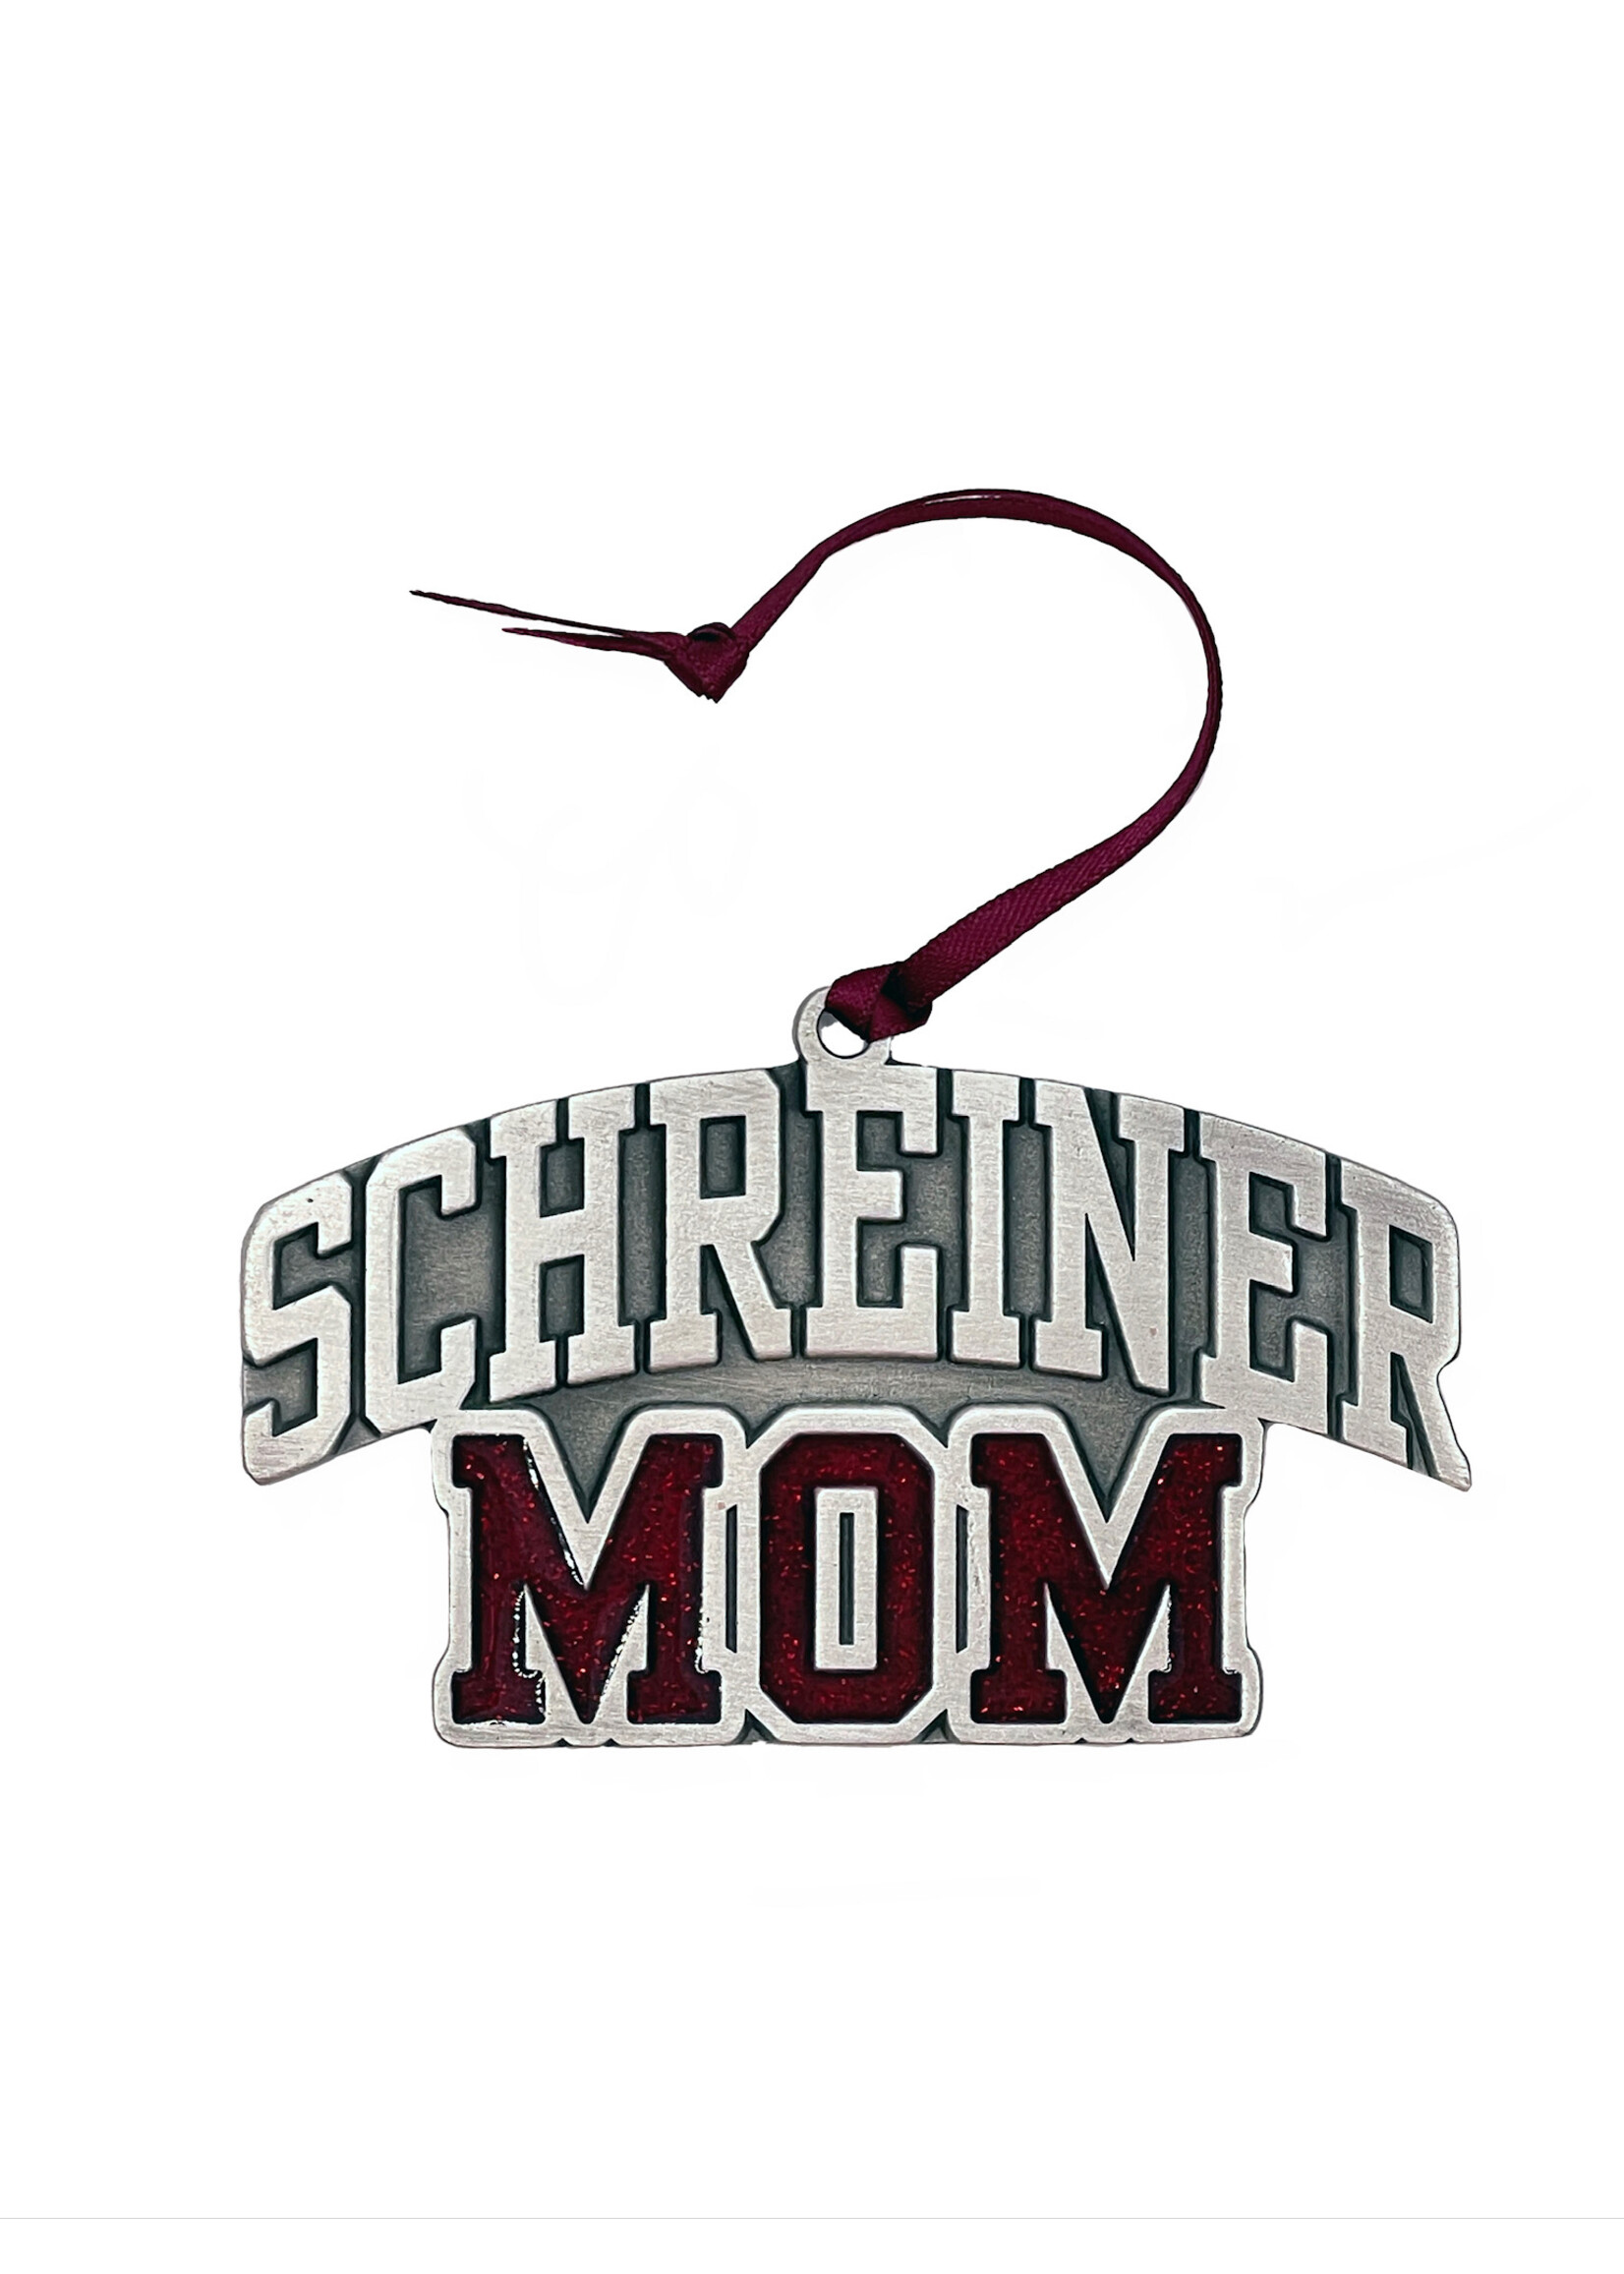 RFSJ, Inc. Schreiner Mom Ornament